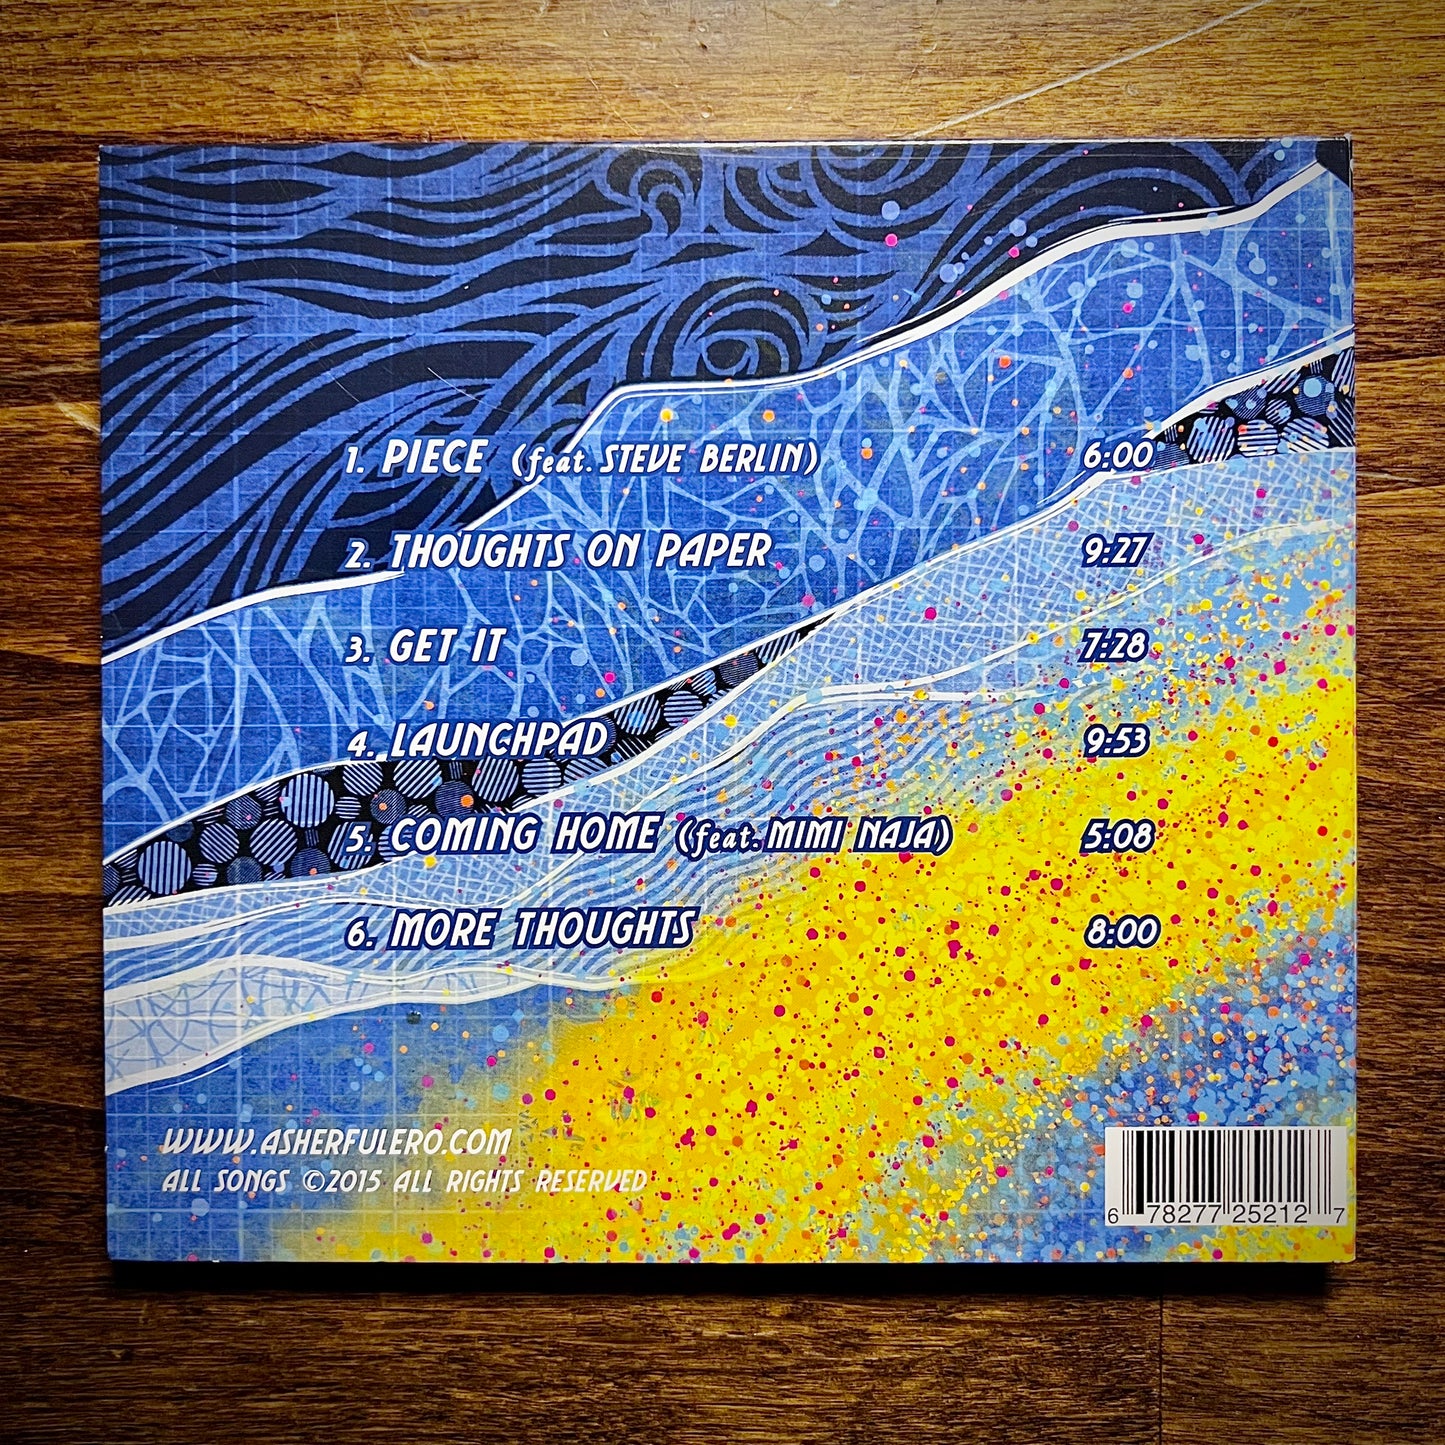 Asher Fulero Band - Catching Air (CD)